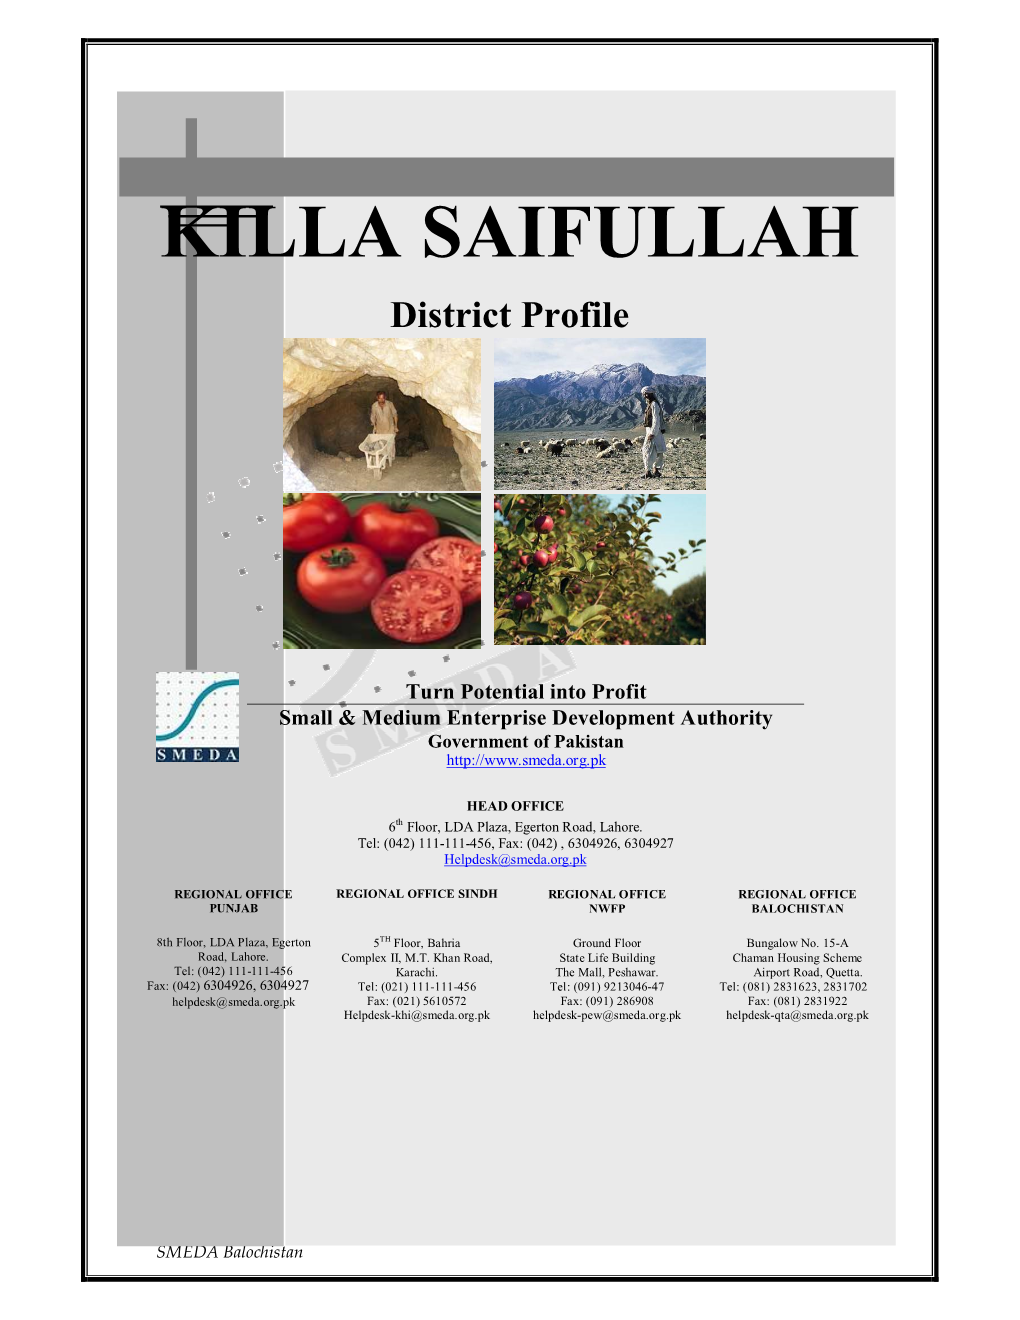 District Profile of Killa Saifullah